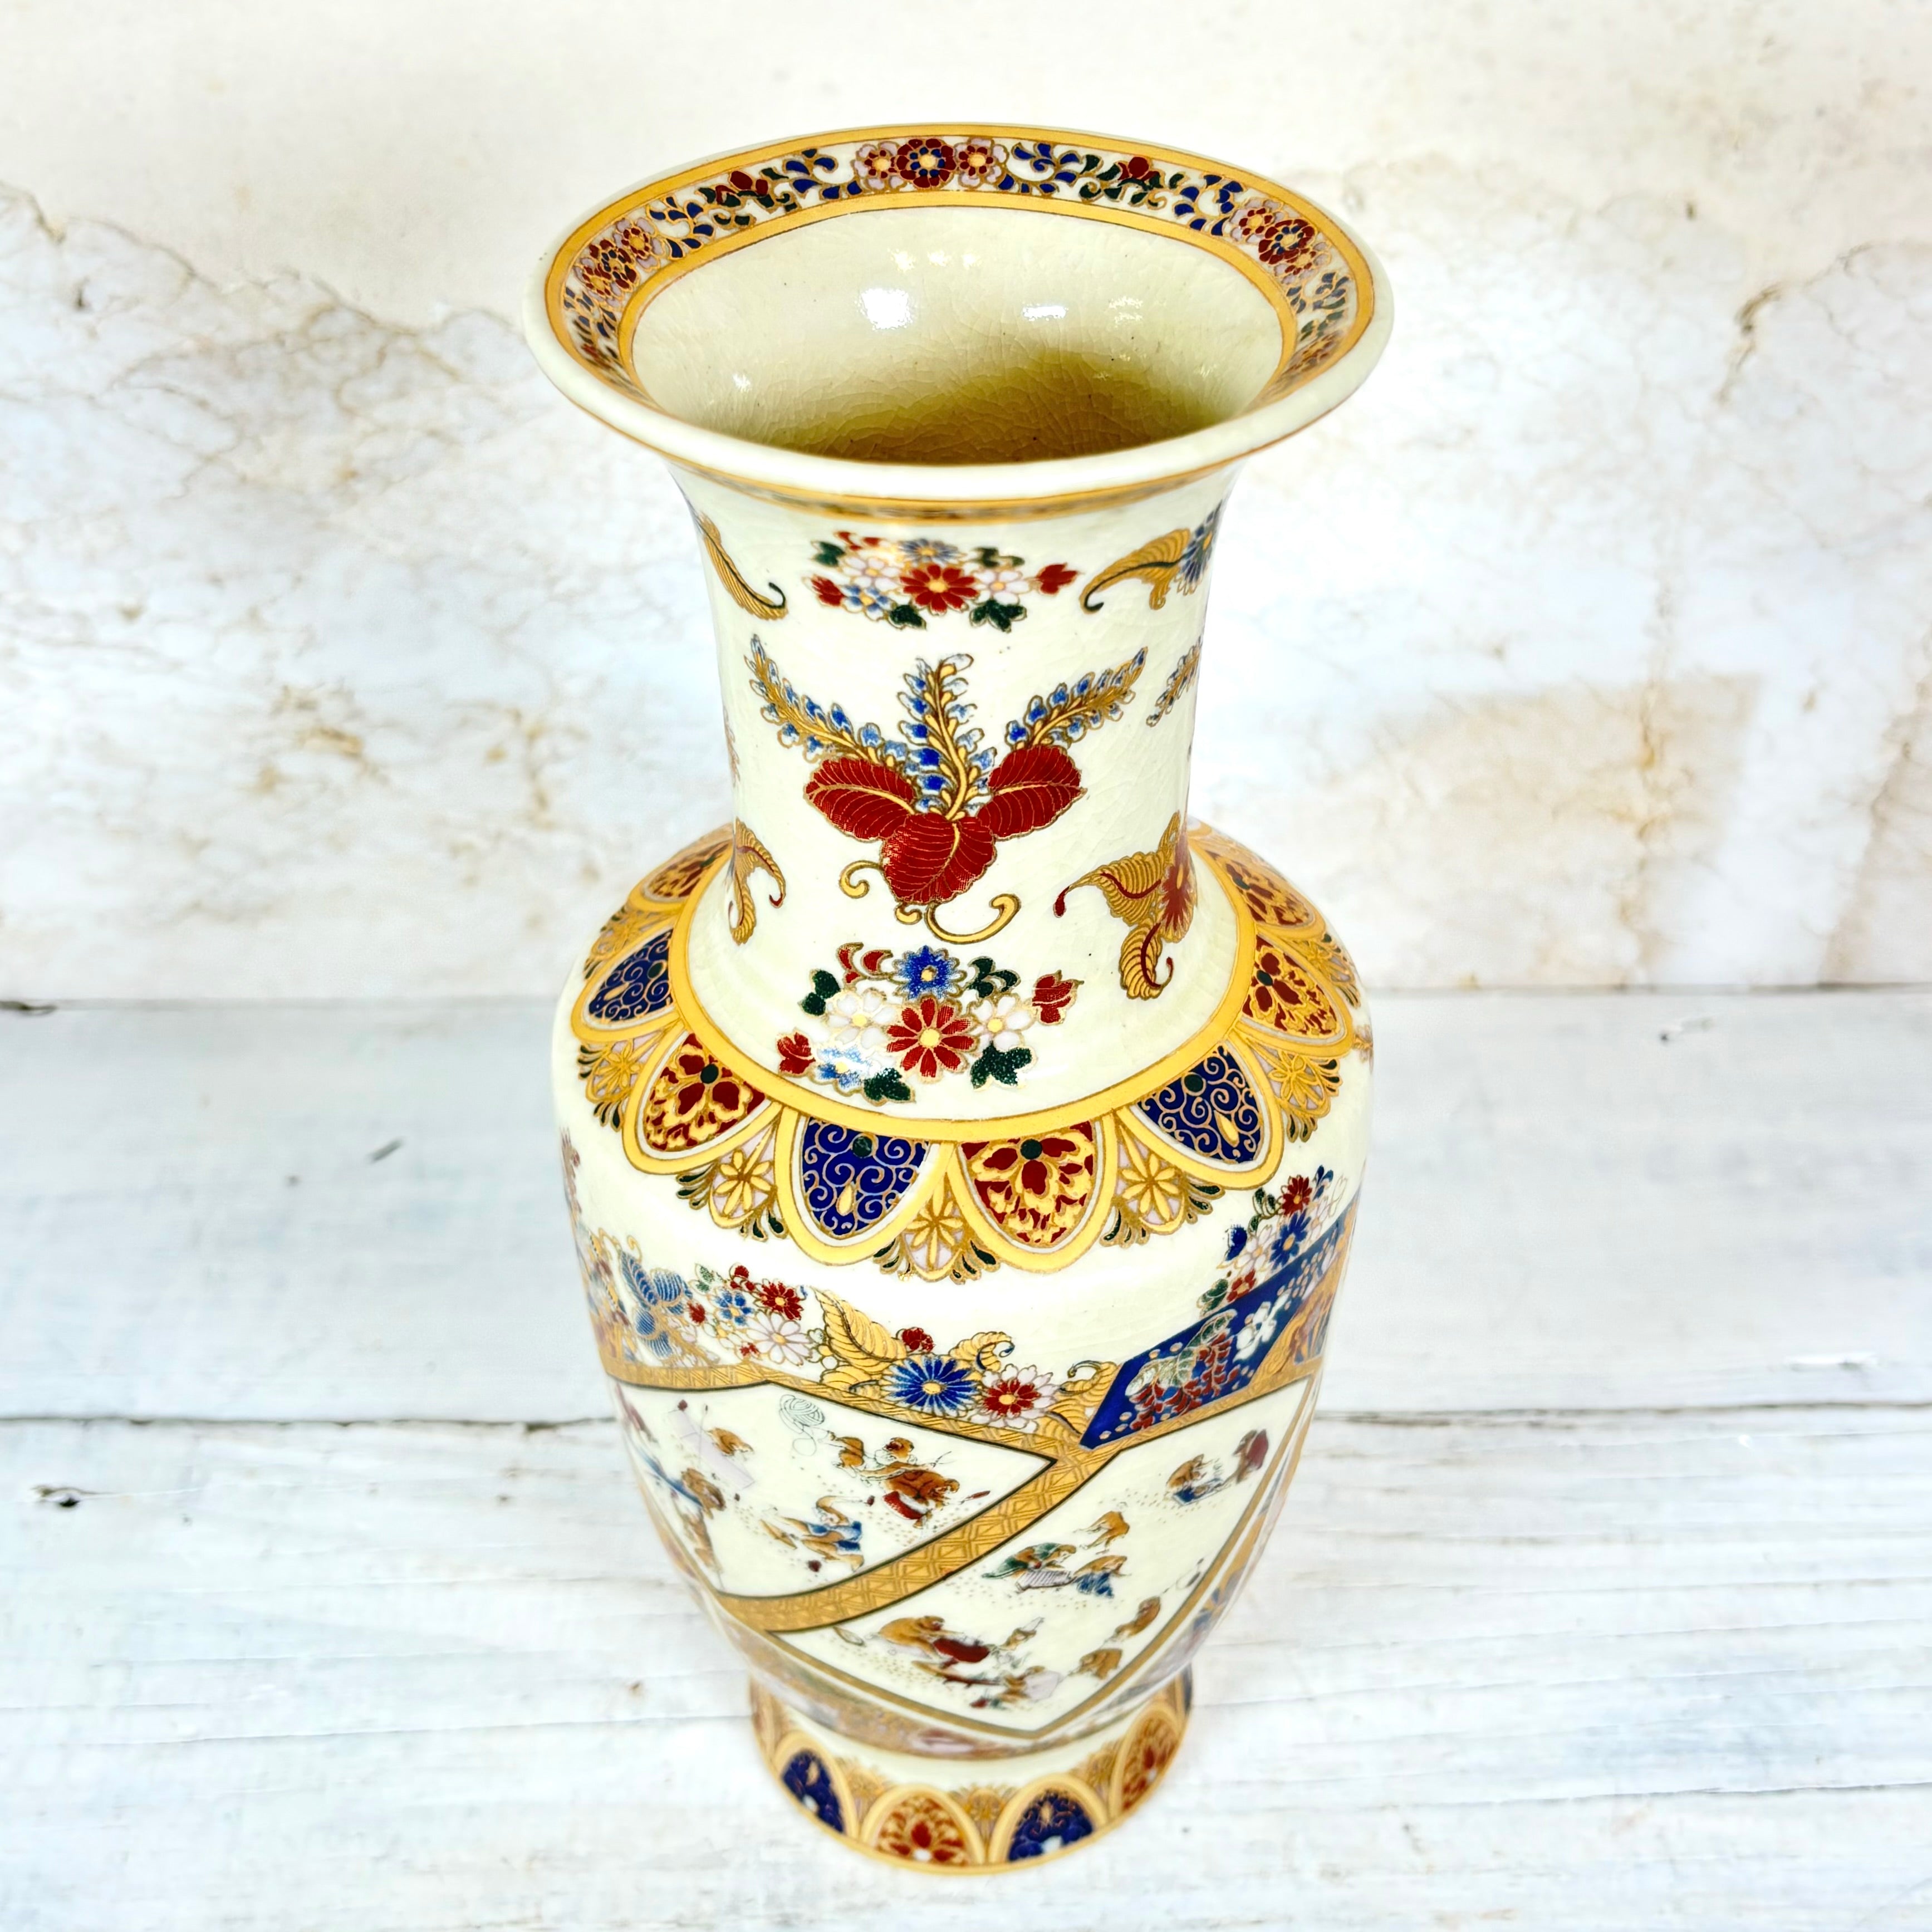 Vintage Satsuma Japanese Vase